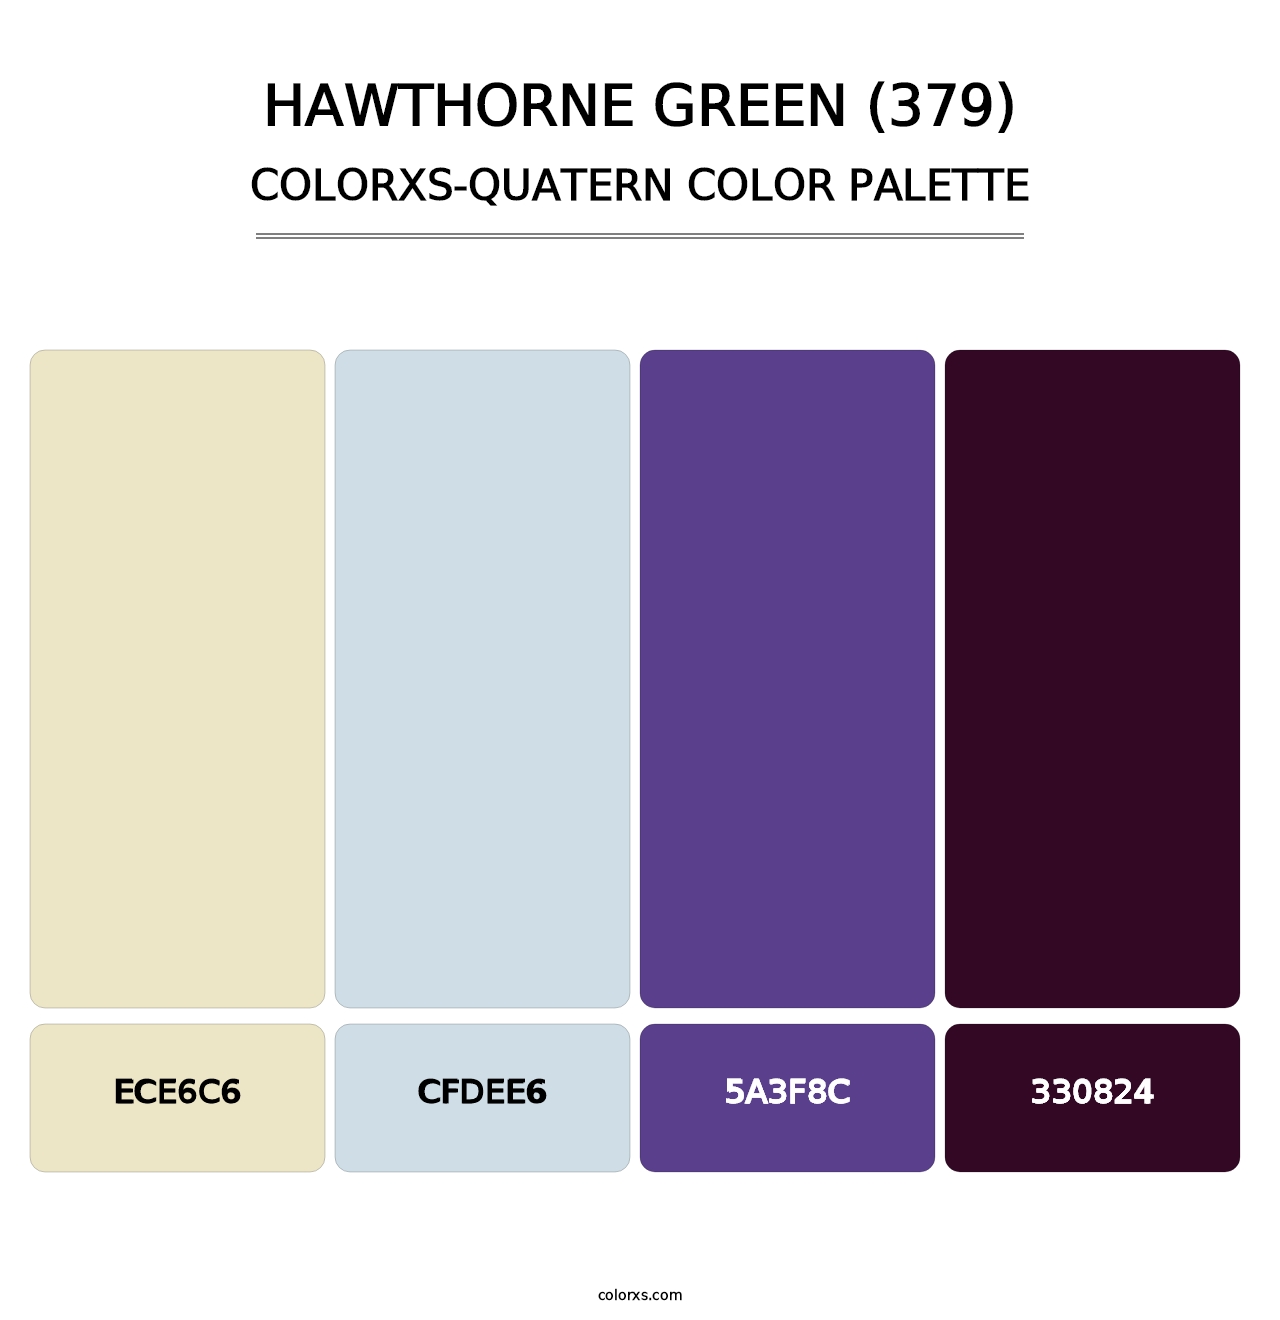 Hawthorne Green (379) - Colorxs Quatern Palette